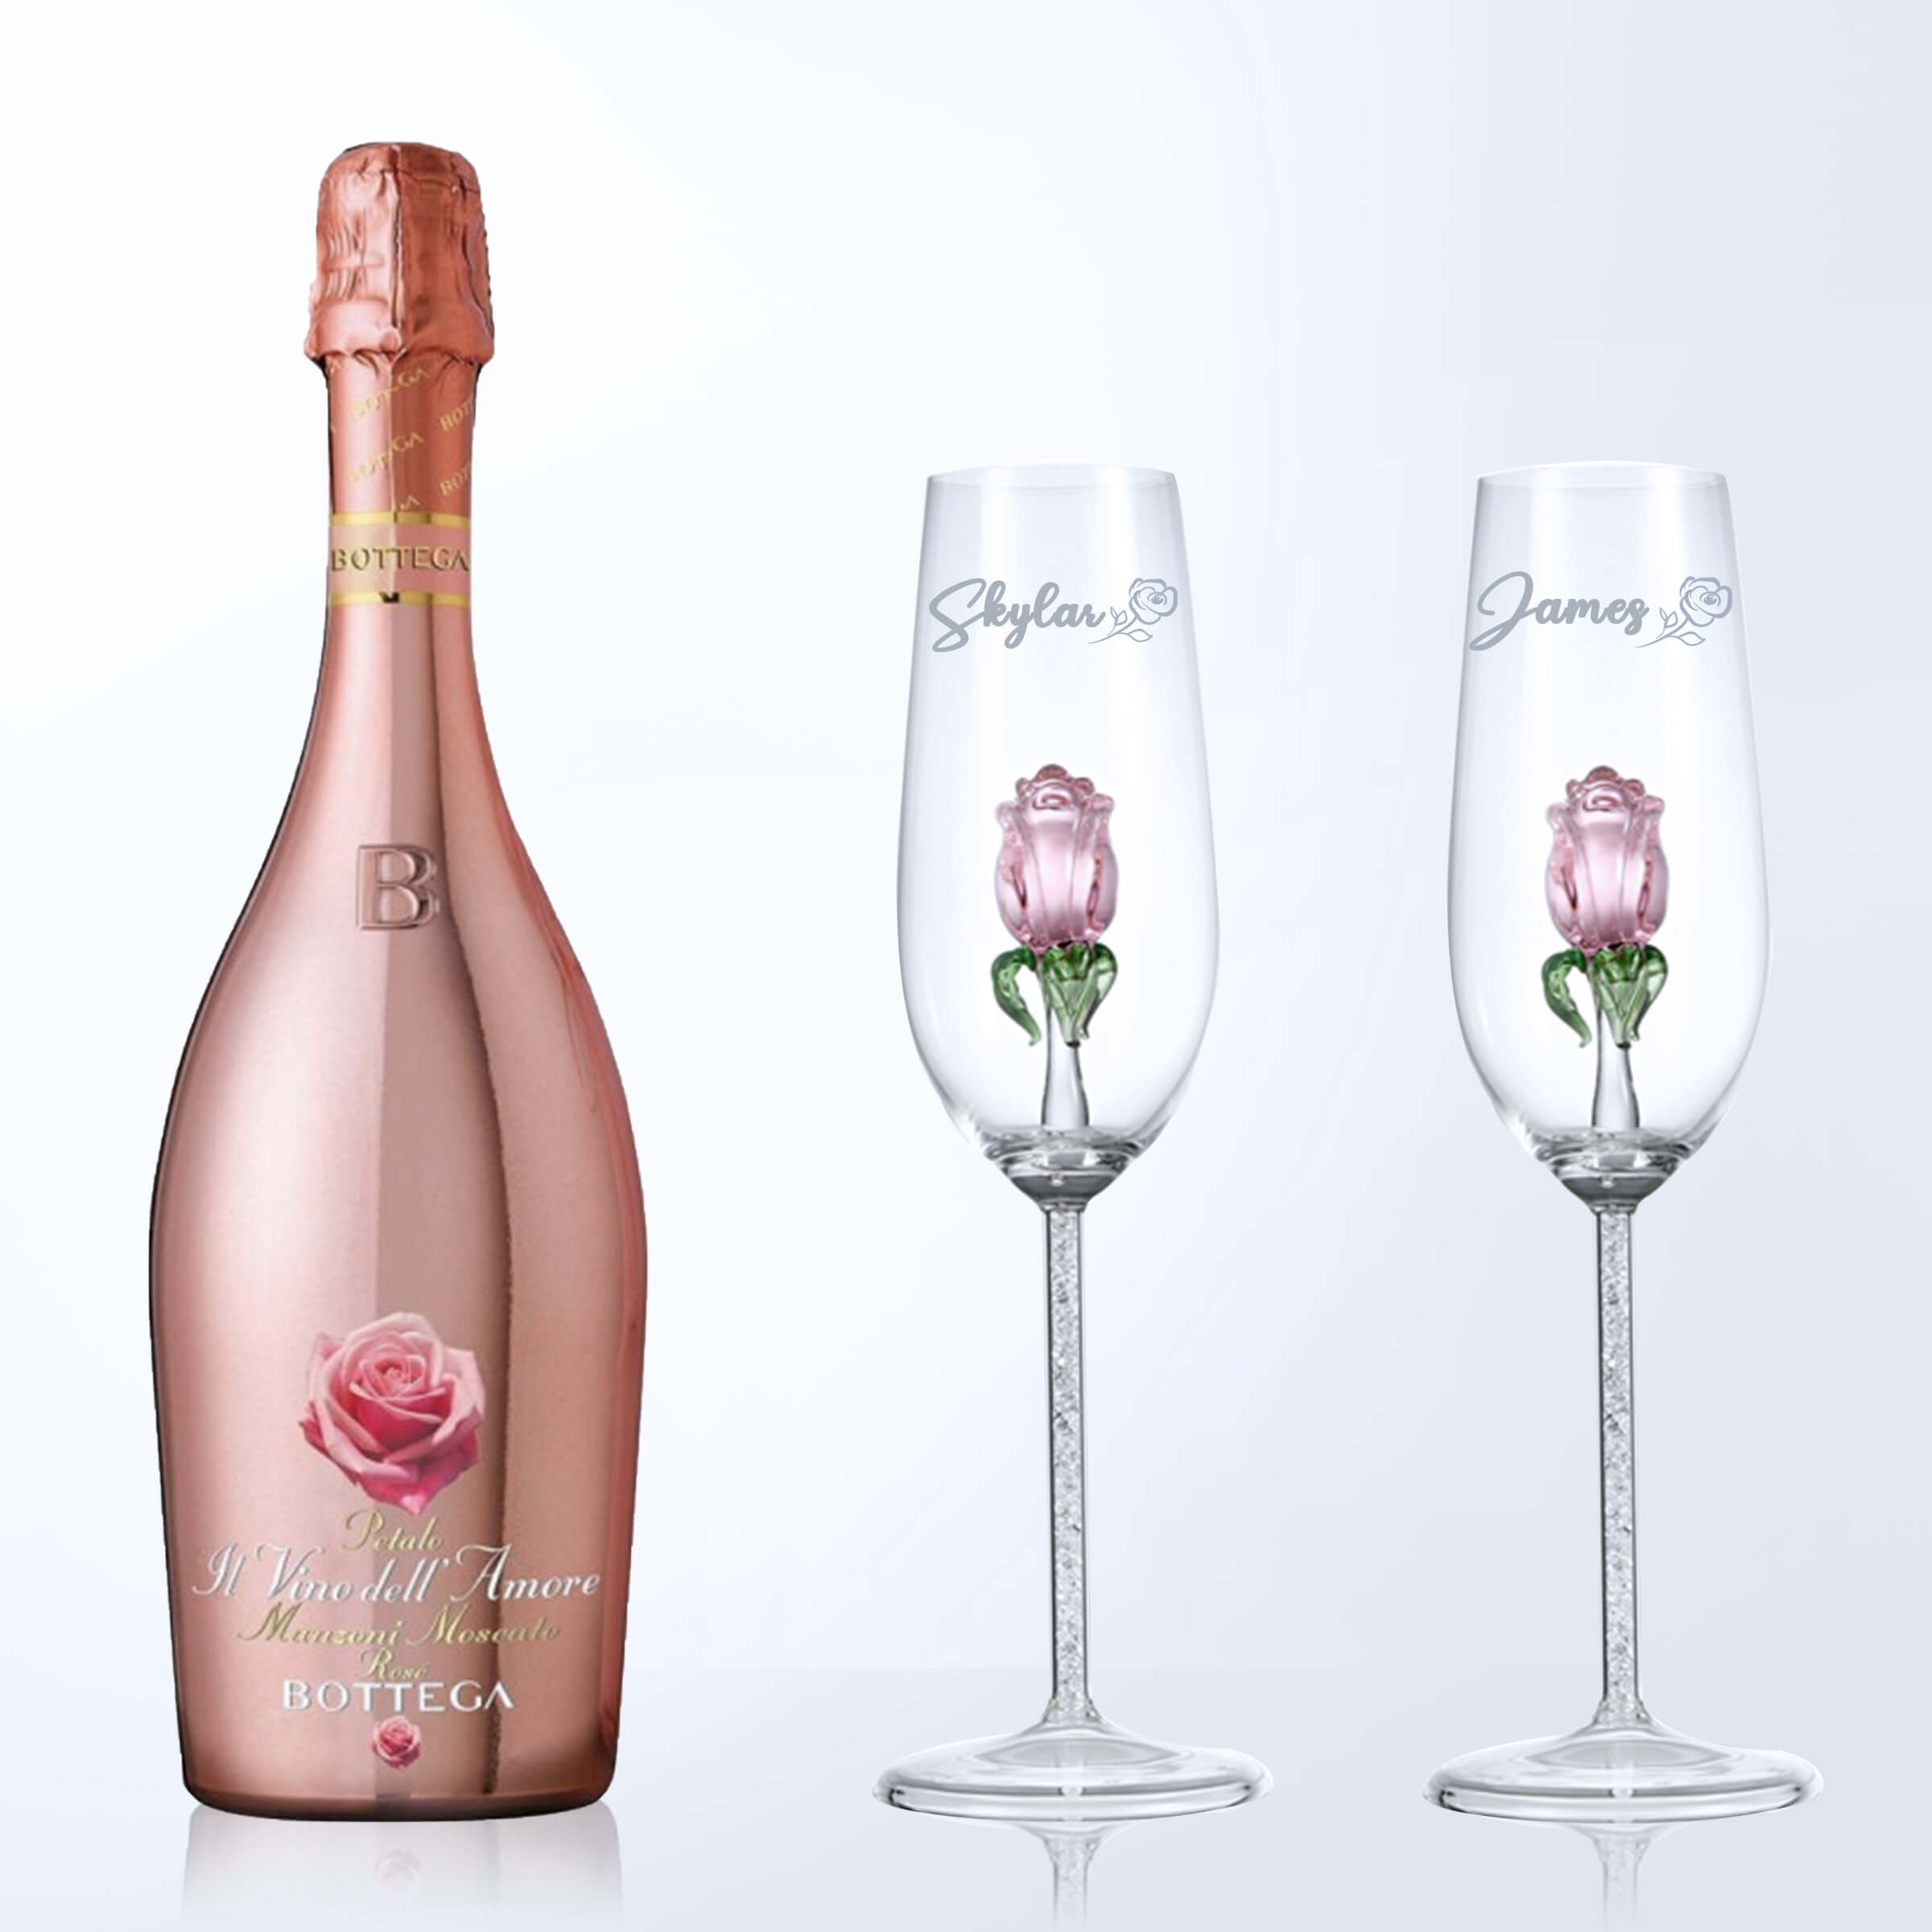 Bottega Manzoni Moscato Rose & Rose Champagne Glasses Gift Set with Name Engraving |波特嘉莫斯卡托玫瑰氣泡酒&玫瑰香檳杯套裝(含名字雕刻） - Design Your Own Wine